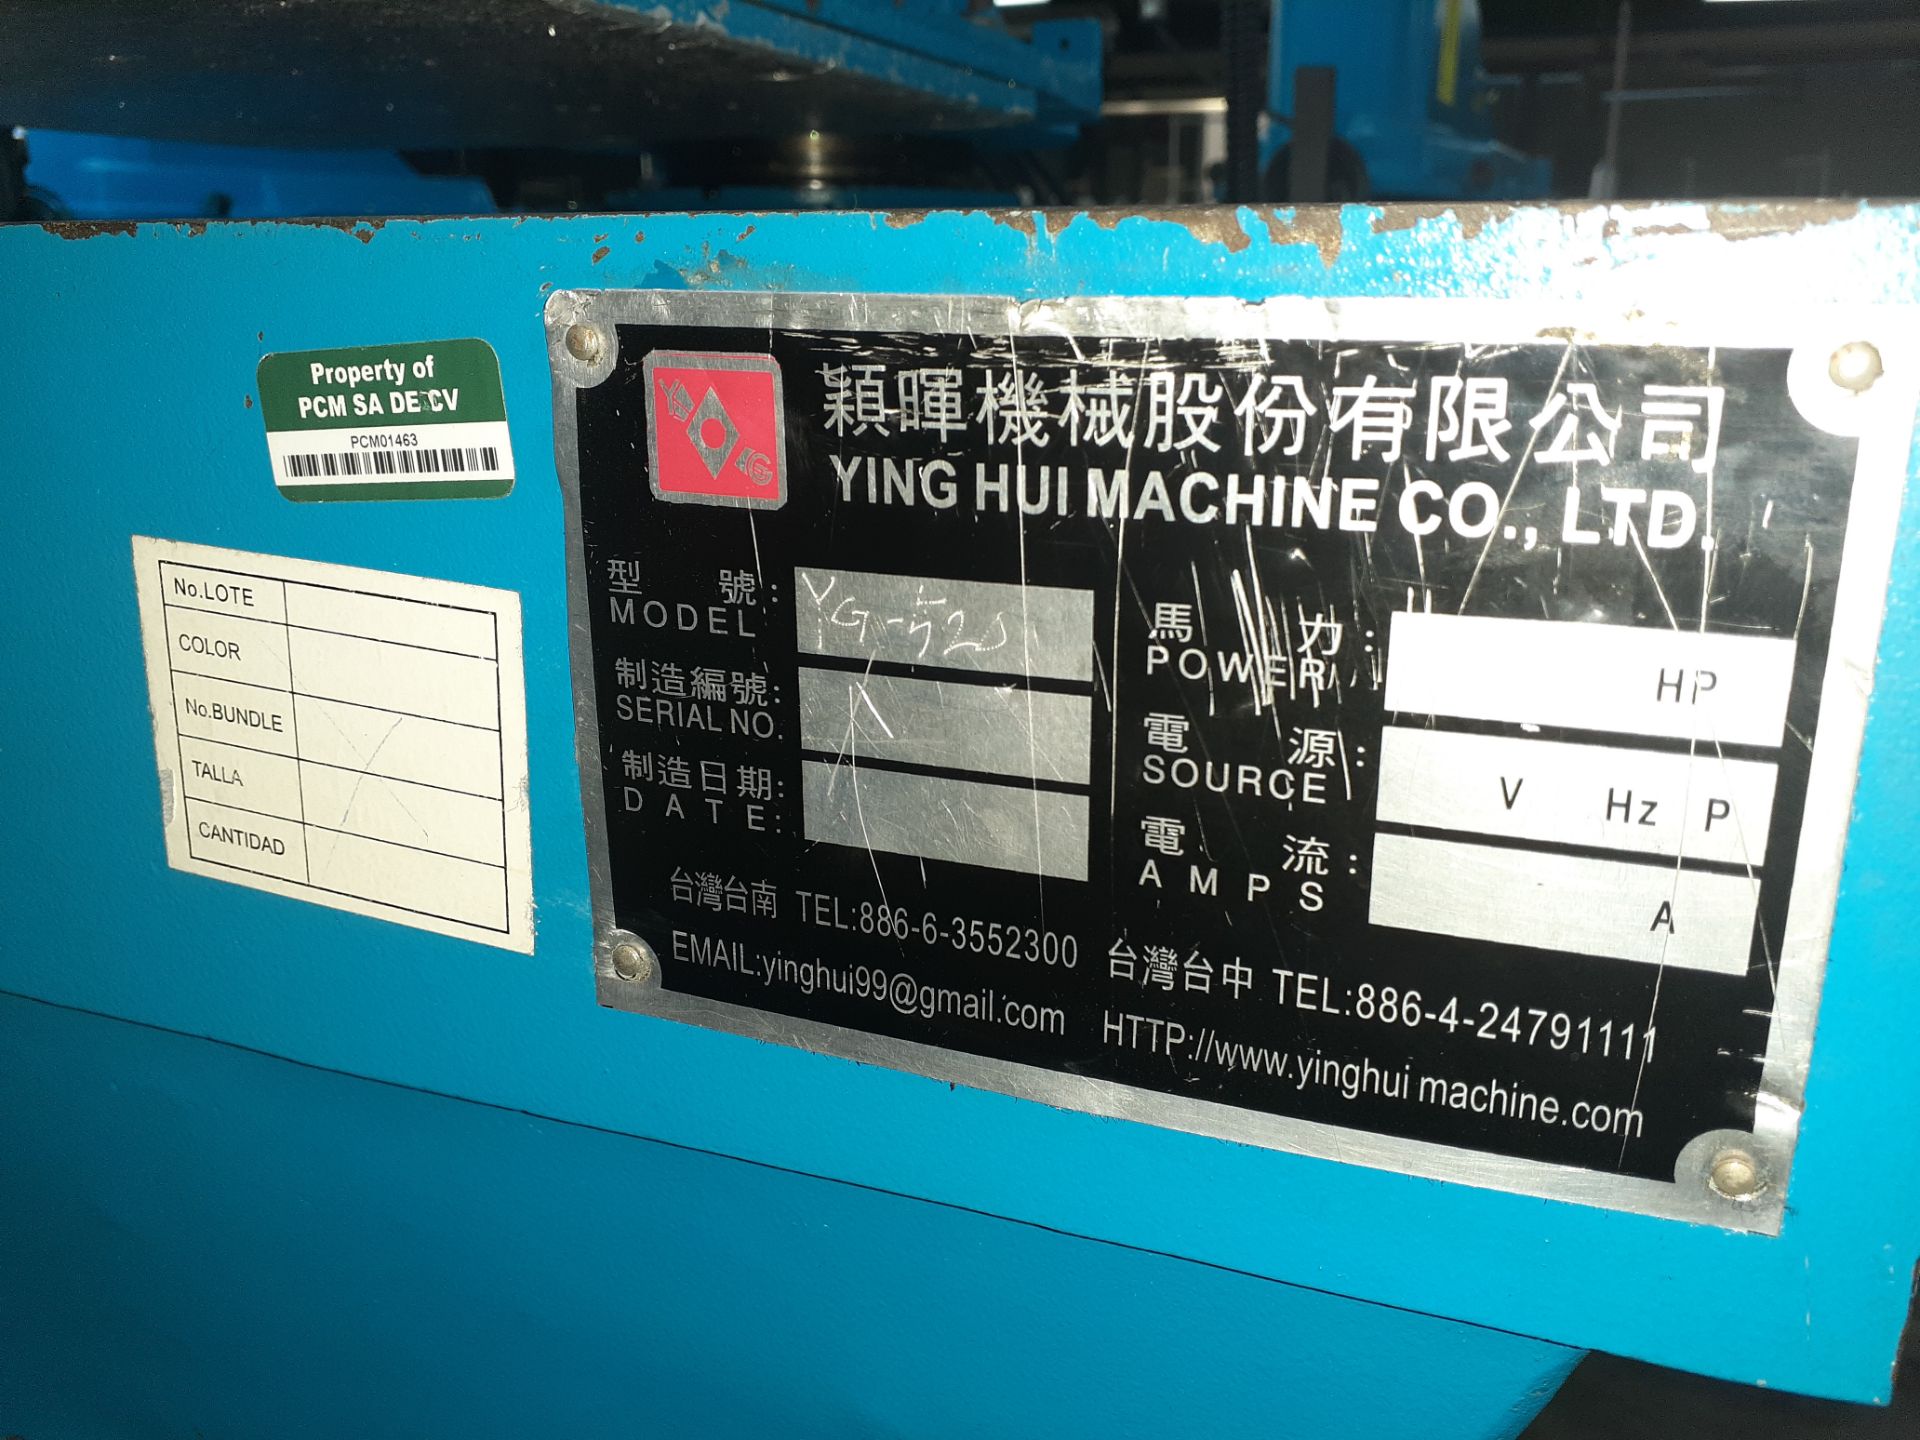 (2) Prensas de corte hidráulica de brazo oscilante, marca Ying Hui Machine, Modelo: YG-520 - Image 9 of 19